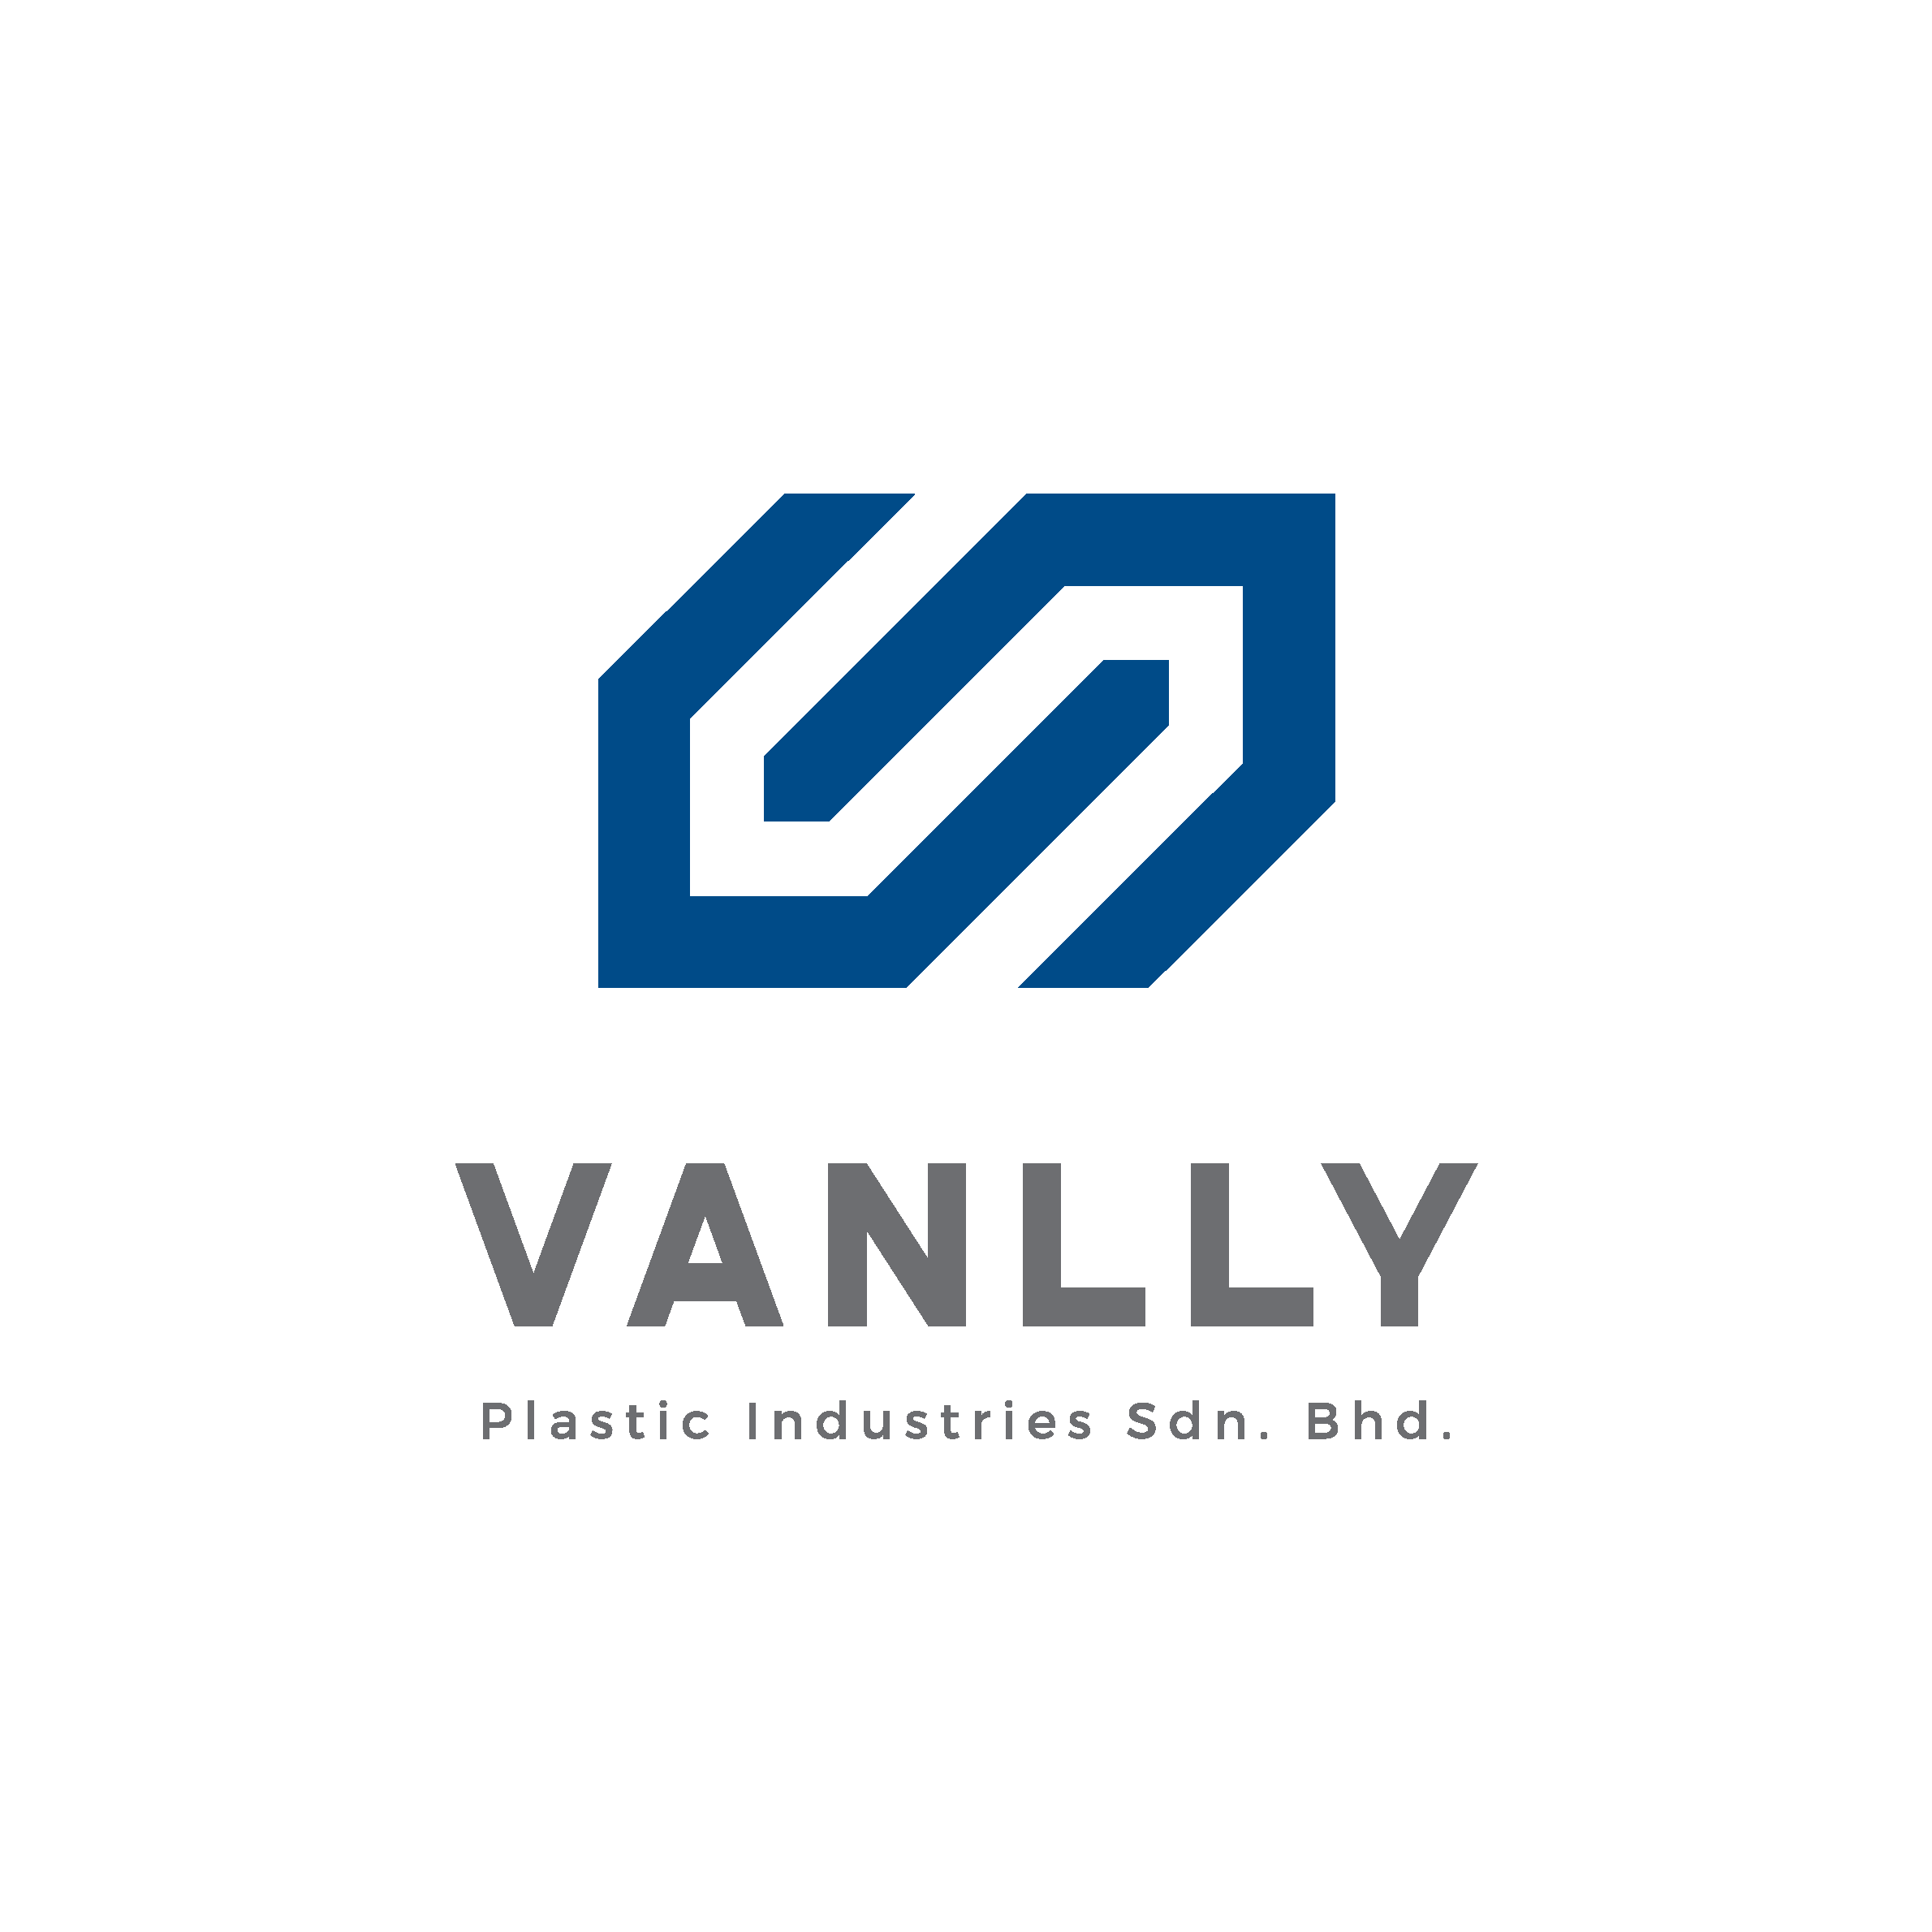 Vanlly Plastic Industries